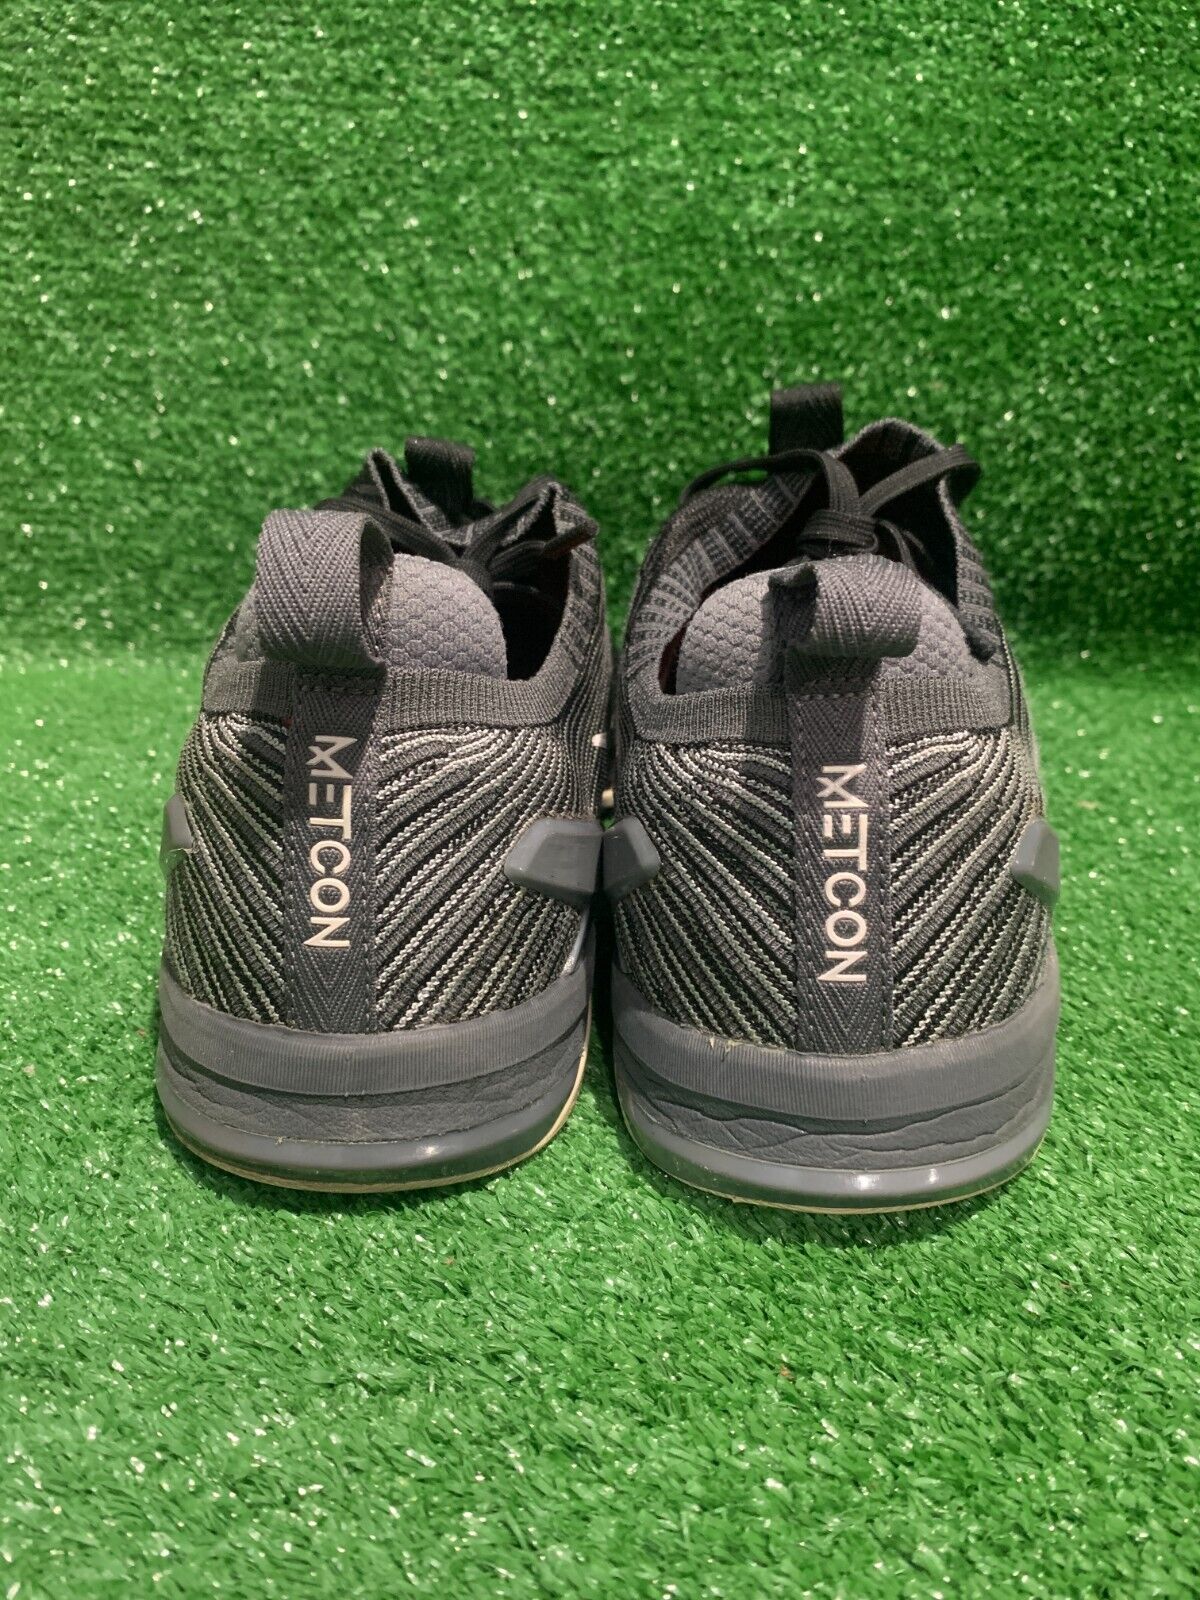 Nike Metcon Black/grey Mens lightweight running shoe US Size 10 (Women 11.5)